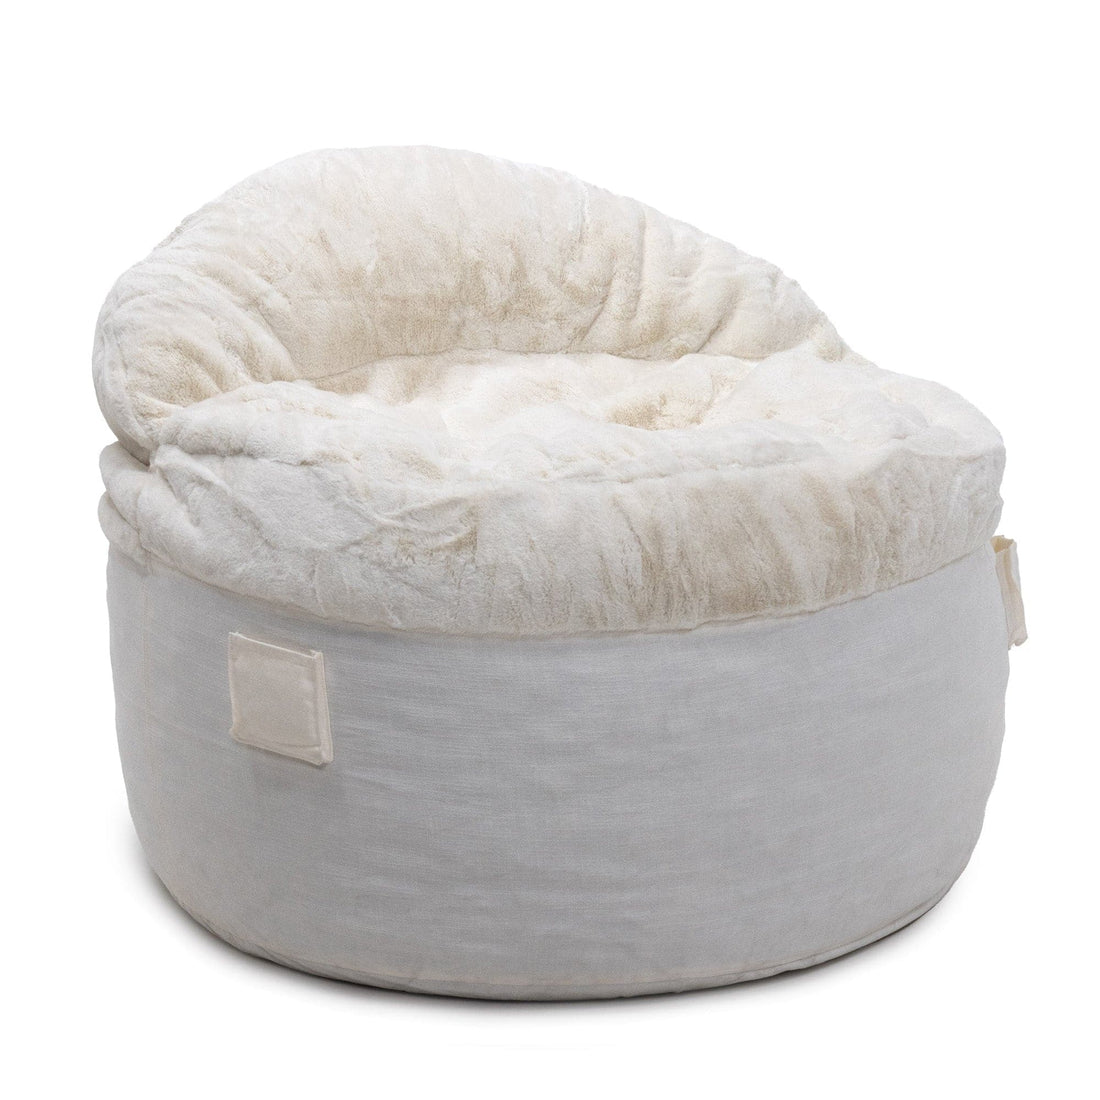 Adult Bean Bag Chair - Full - NEST Bunny Fur